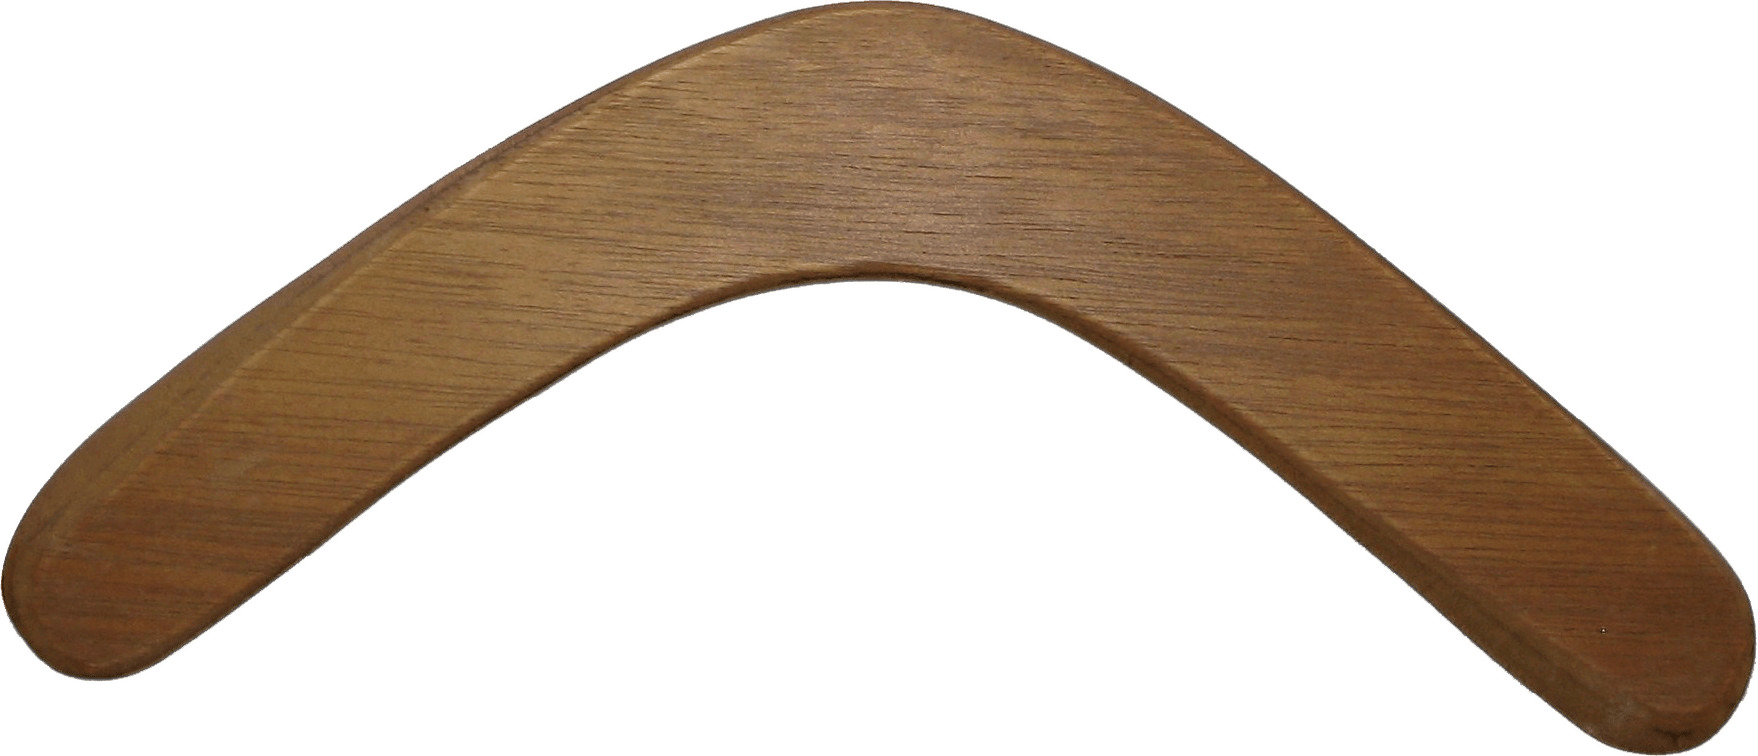 Blank Wooden Boomerang png